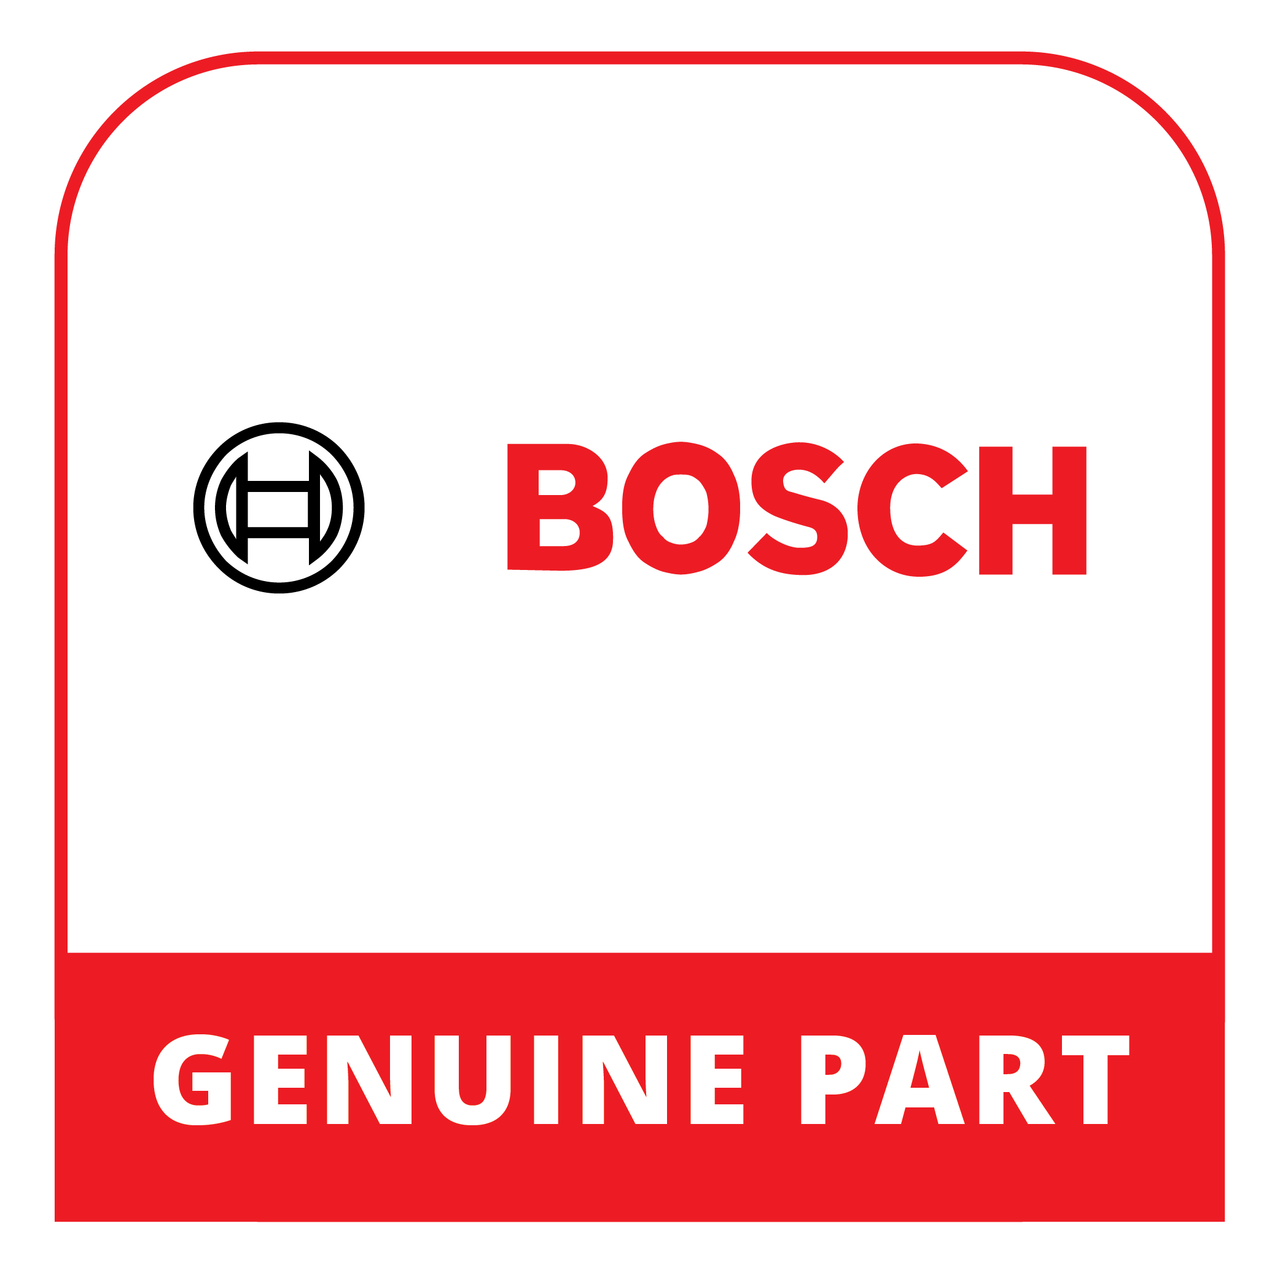 Bosch (Thermador) 12027302 - Salver - Genuine Bosch (Thermador) Part